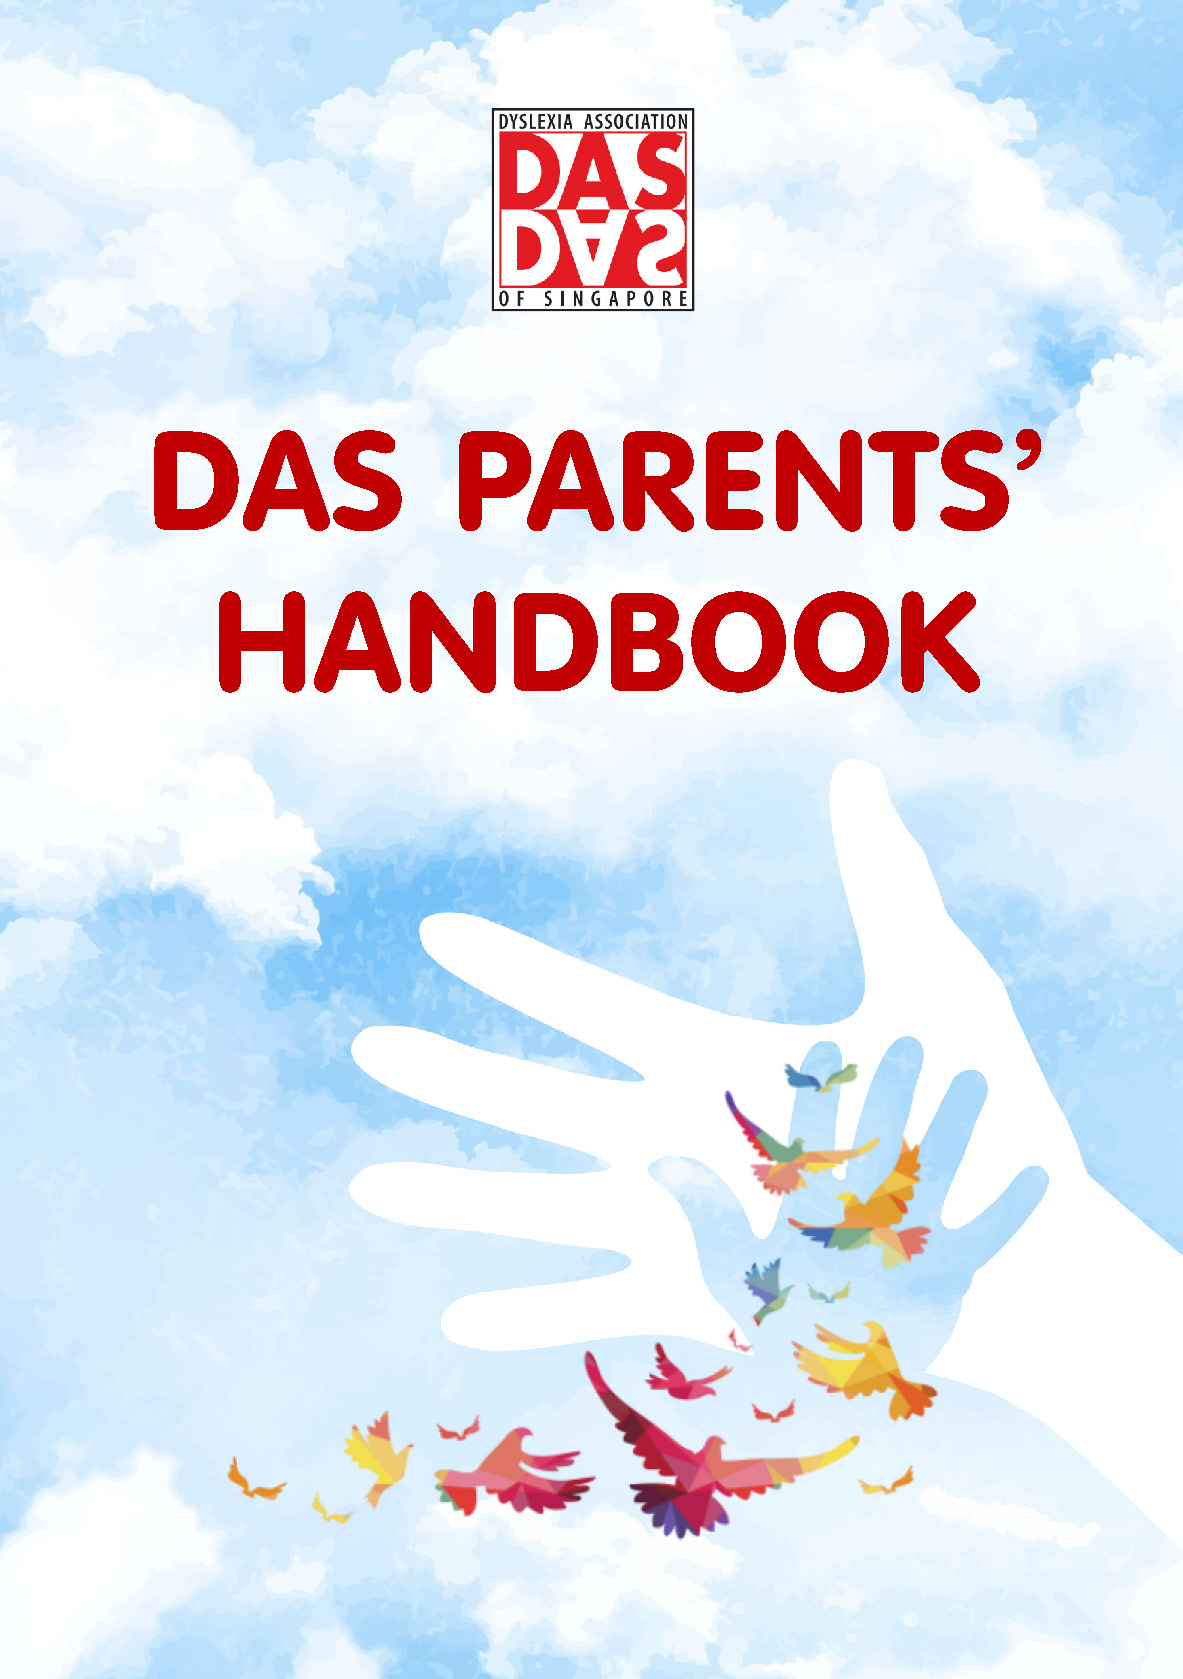 DAS Parents Handbook 2020 Page 01